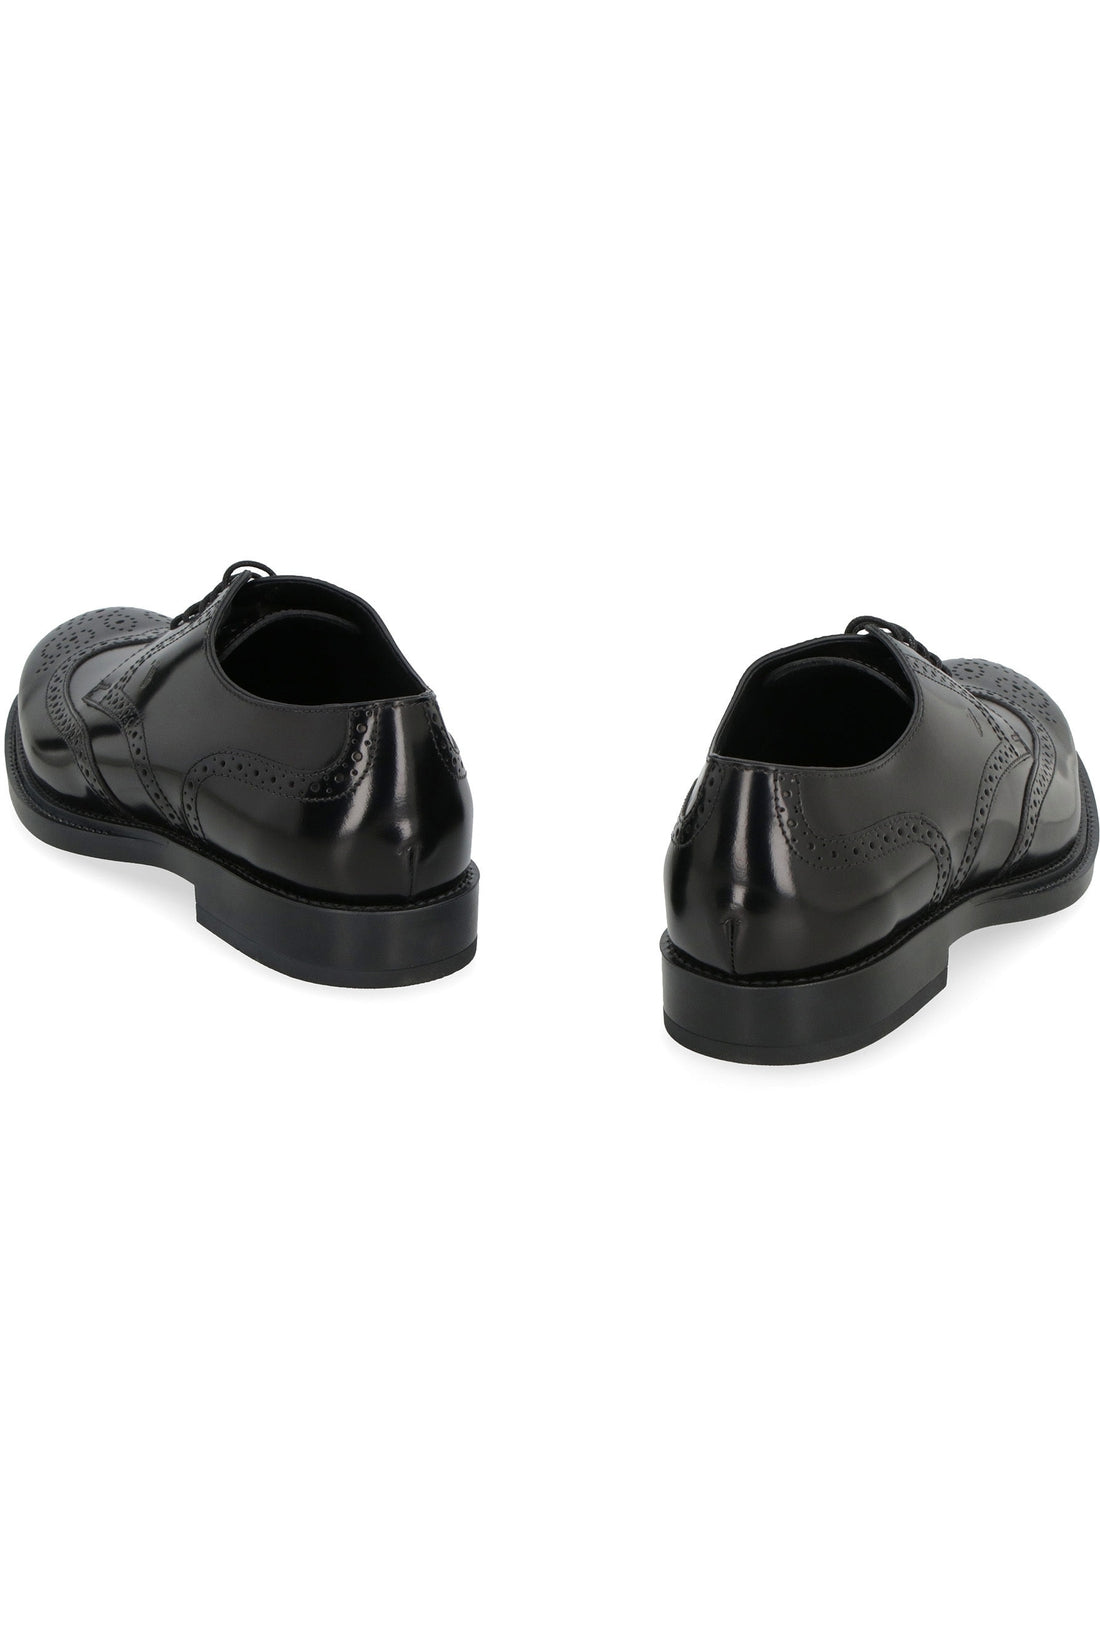 Tod's-OUTLET-SALE-Derby leather lace-up shoes-ARCHIVIST